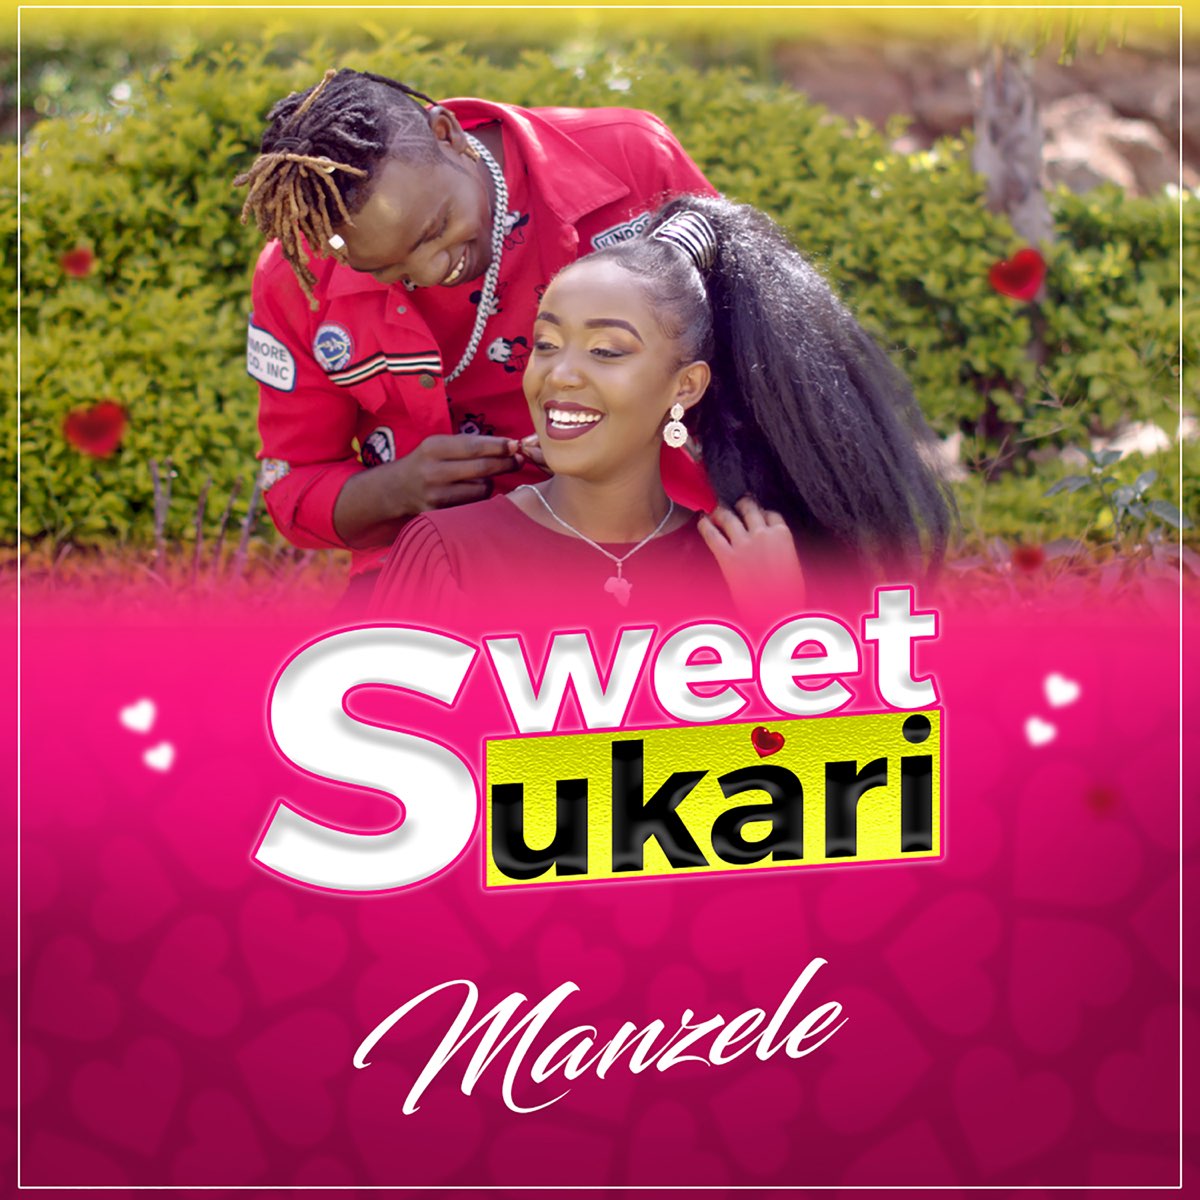 Sweet Sukari - Single by Manzele on Apple Music.